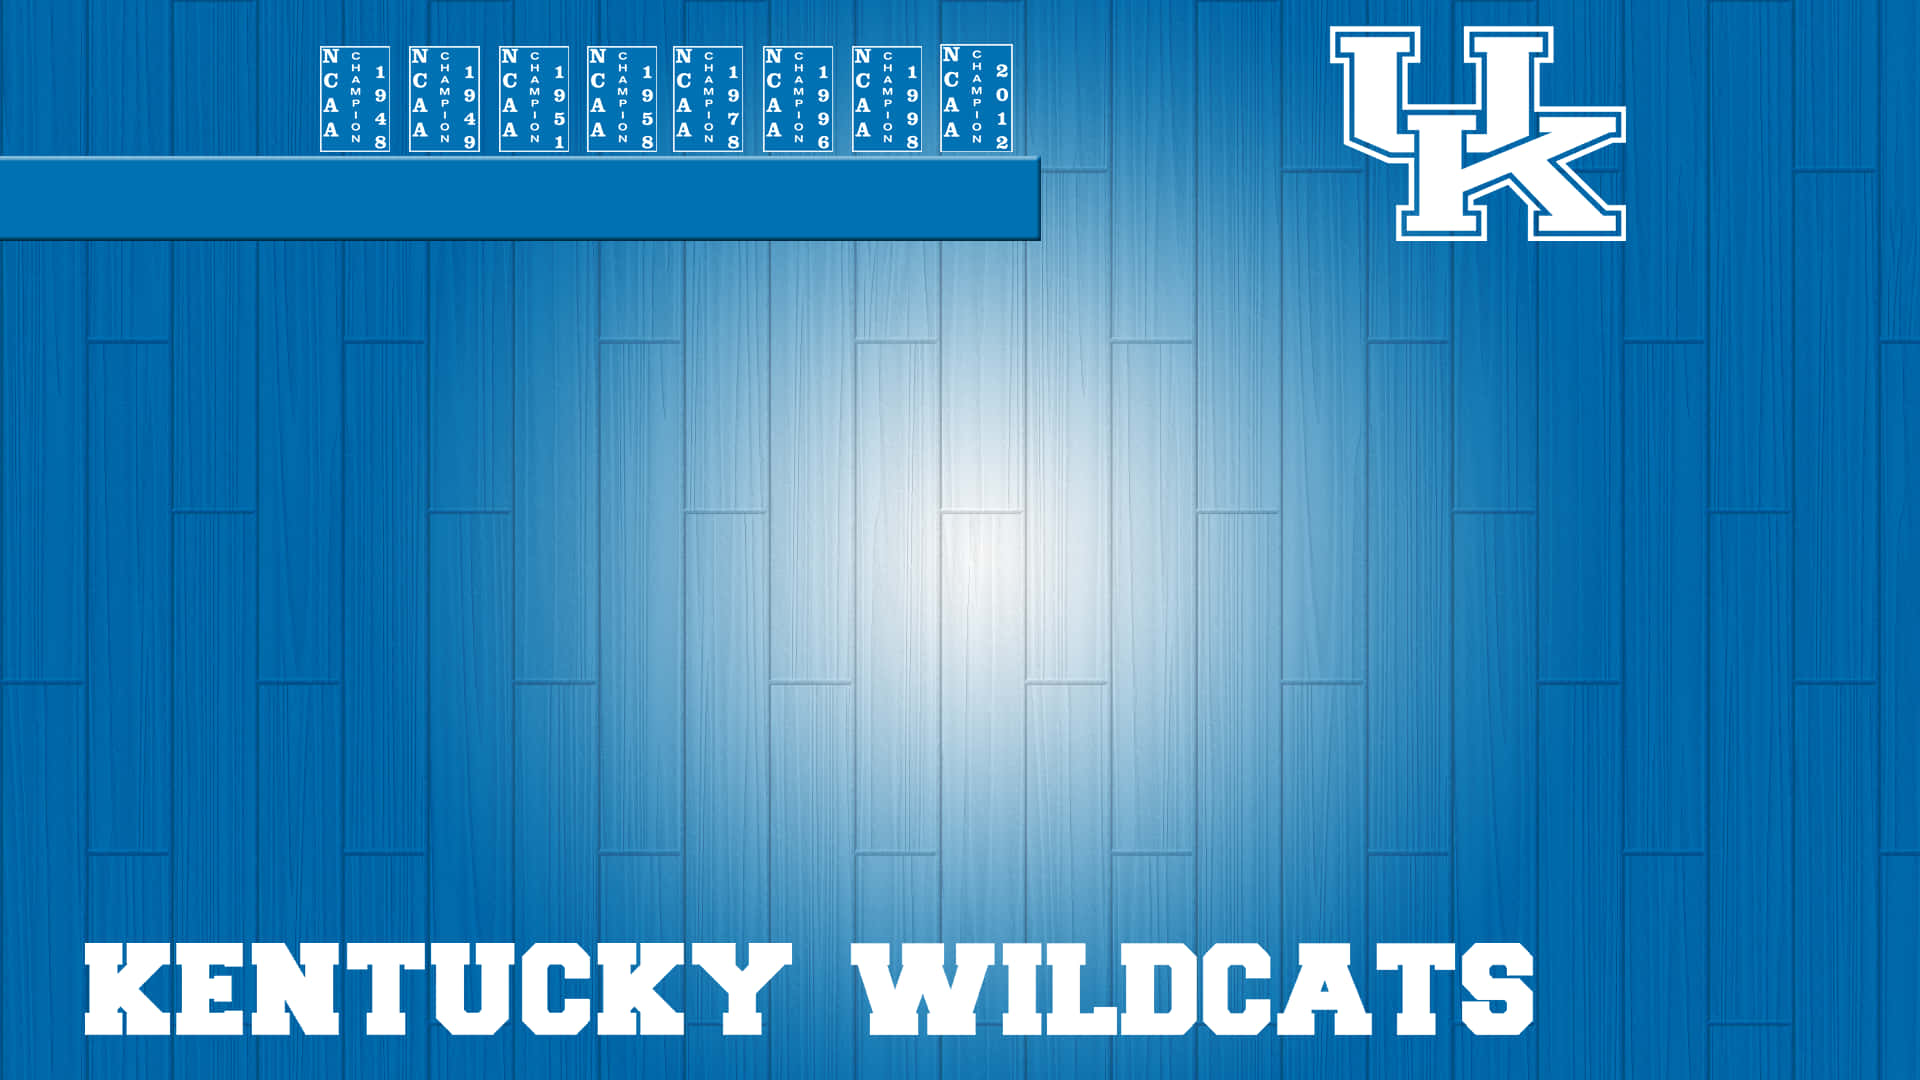 Feieredie Wildcats – Den Stolz Und Die Leidenschaft Des Kentucky-basketballs. Wallpaper